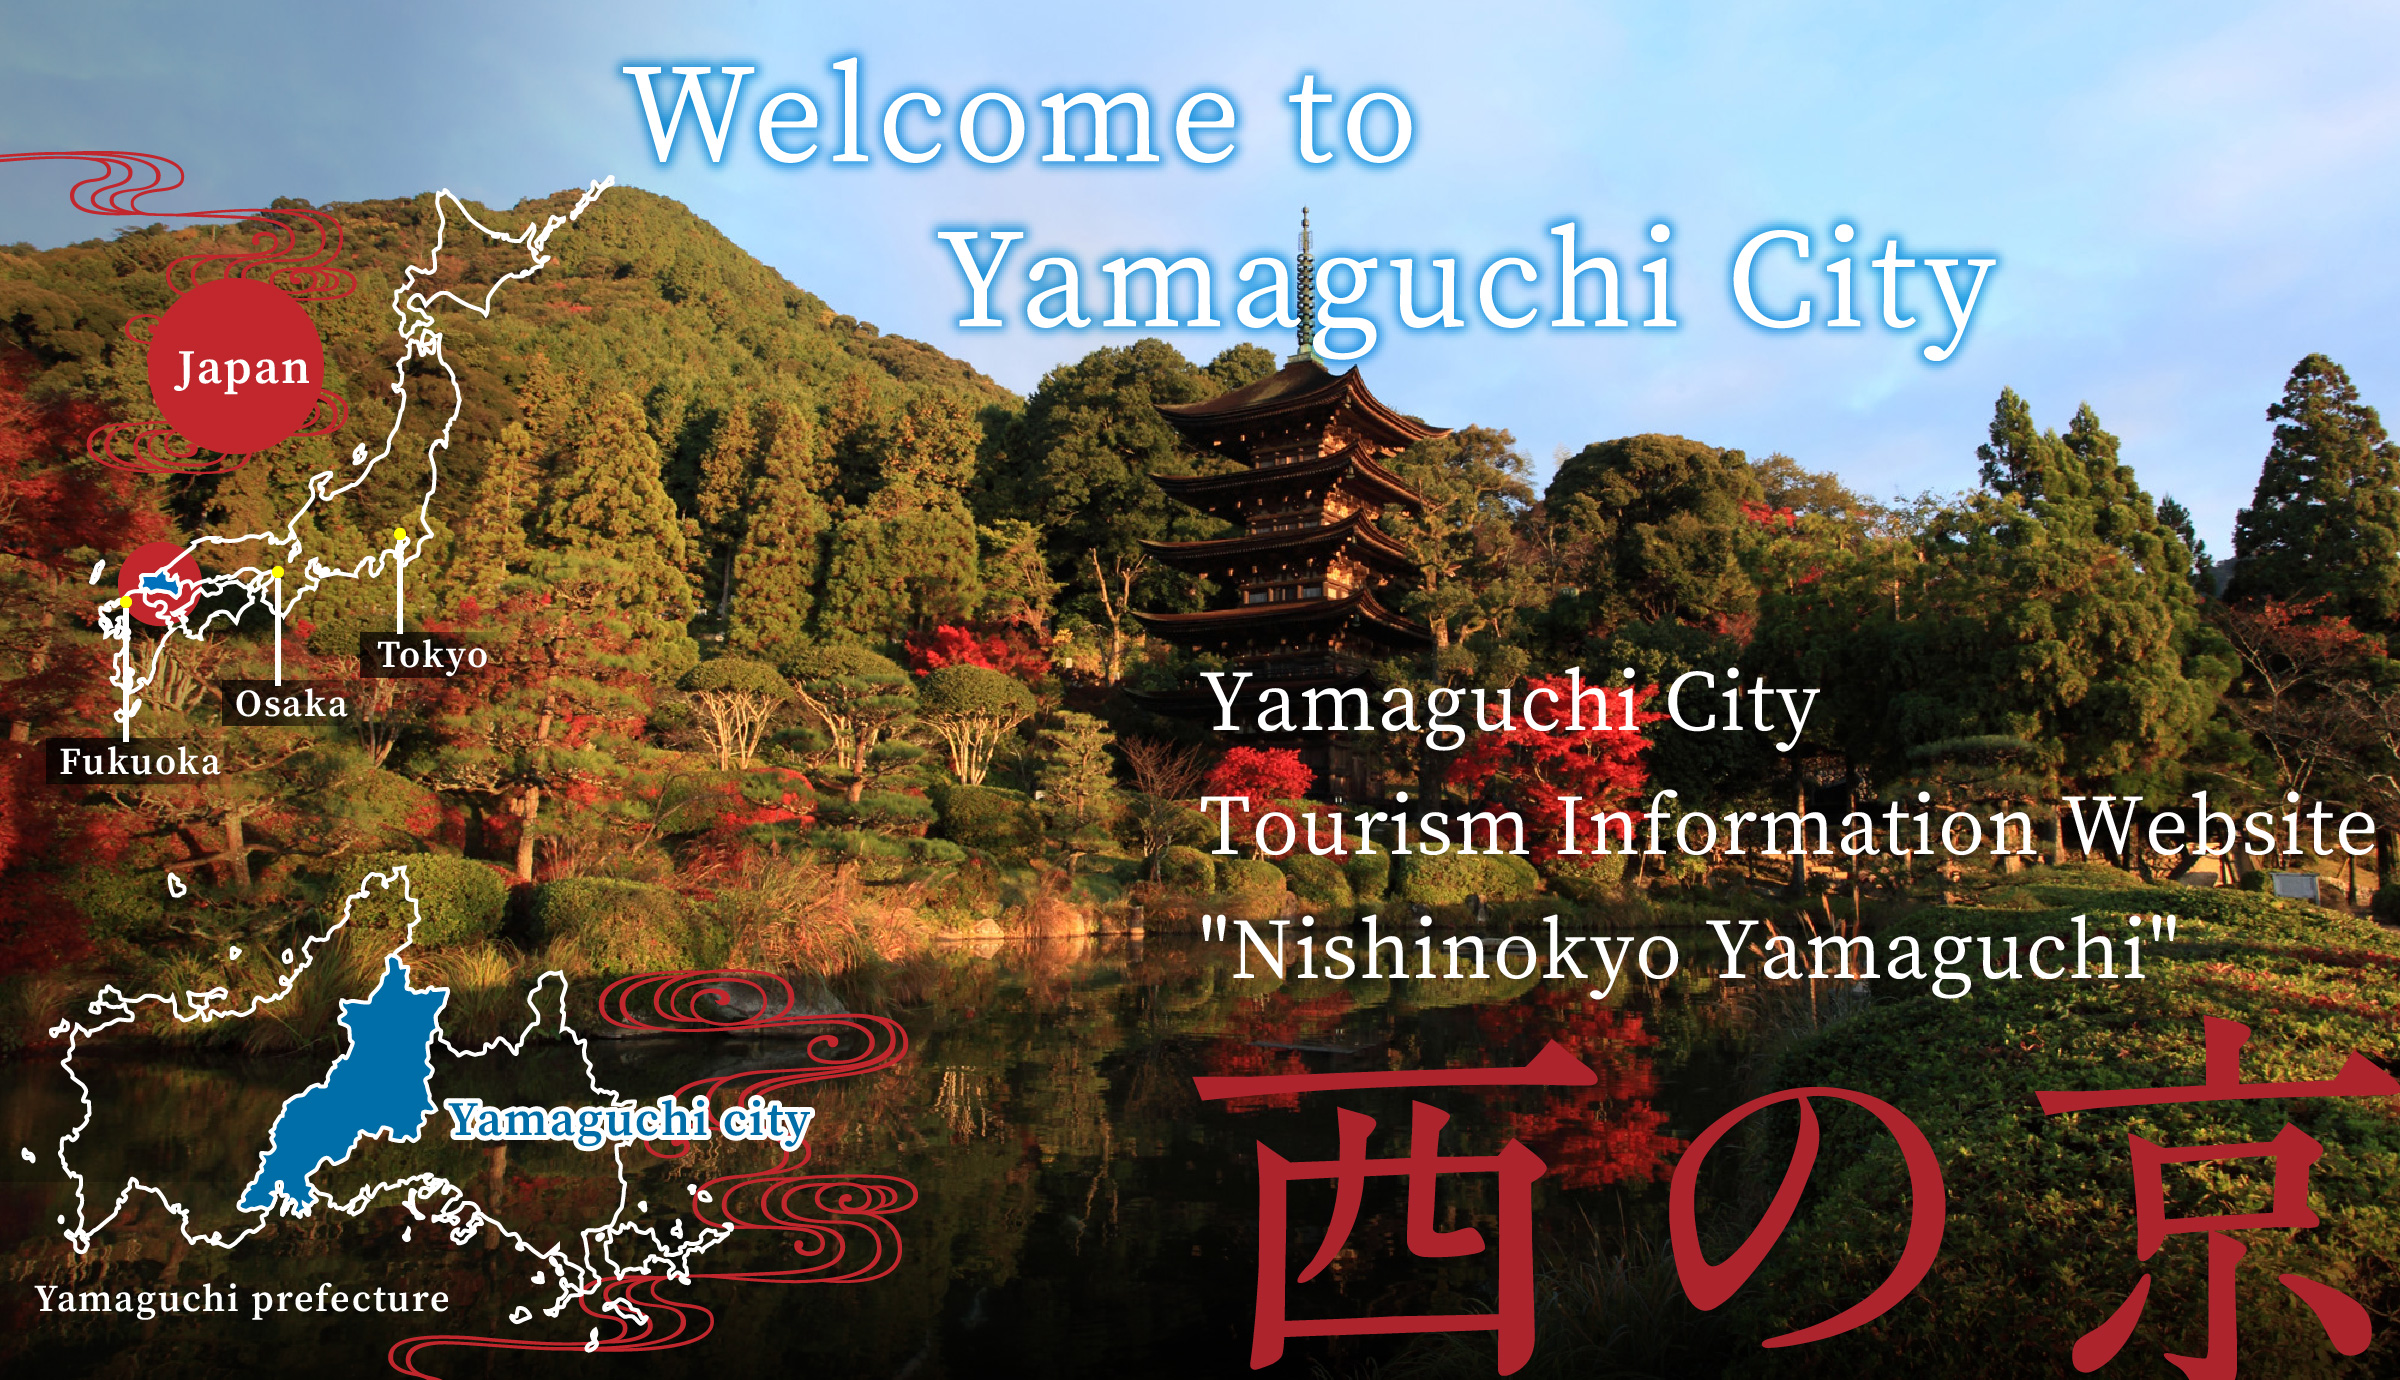 Yamaguchi City Tourism Information Website Nishinokyo Yamaguchi